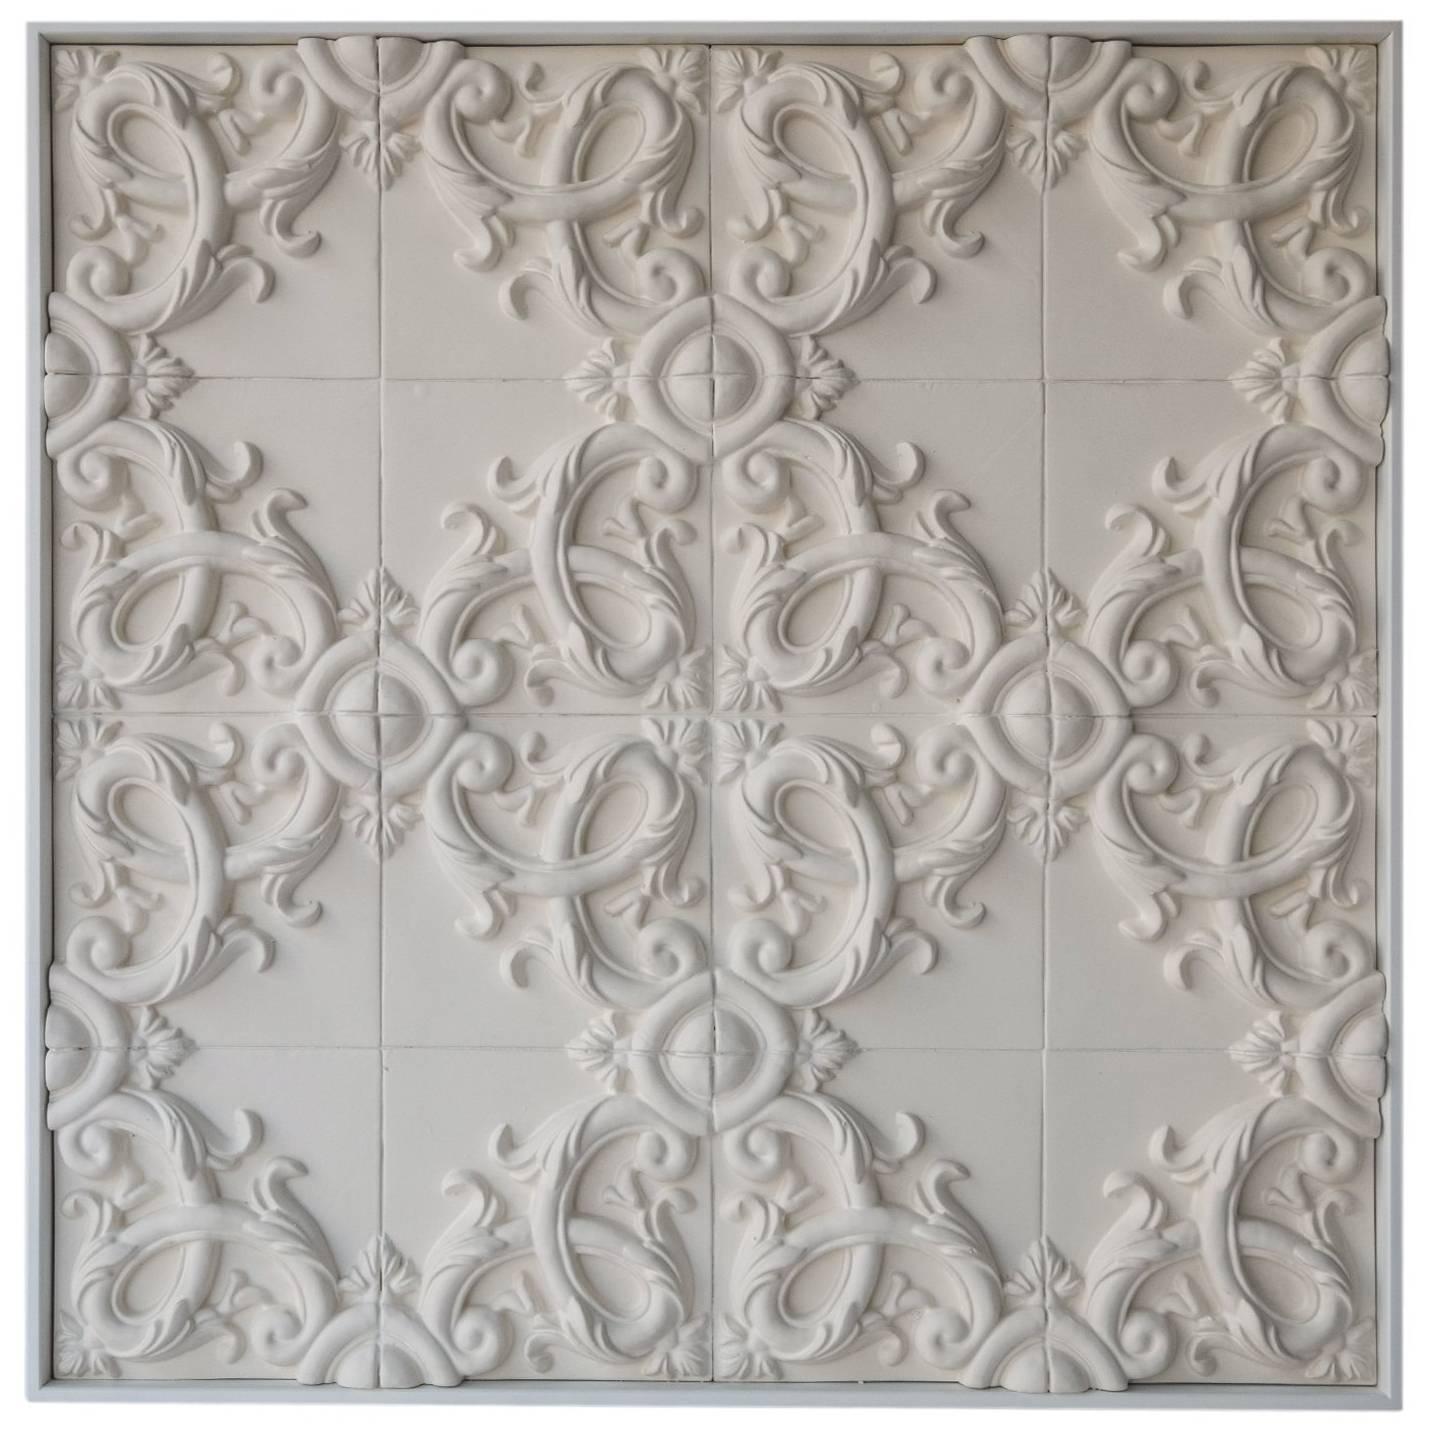 Decorative Panel in Three-Dimensional Baroque Ceramic, Customizable, Acanto For Sale